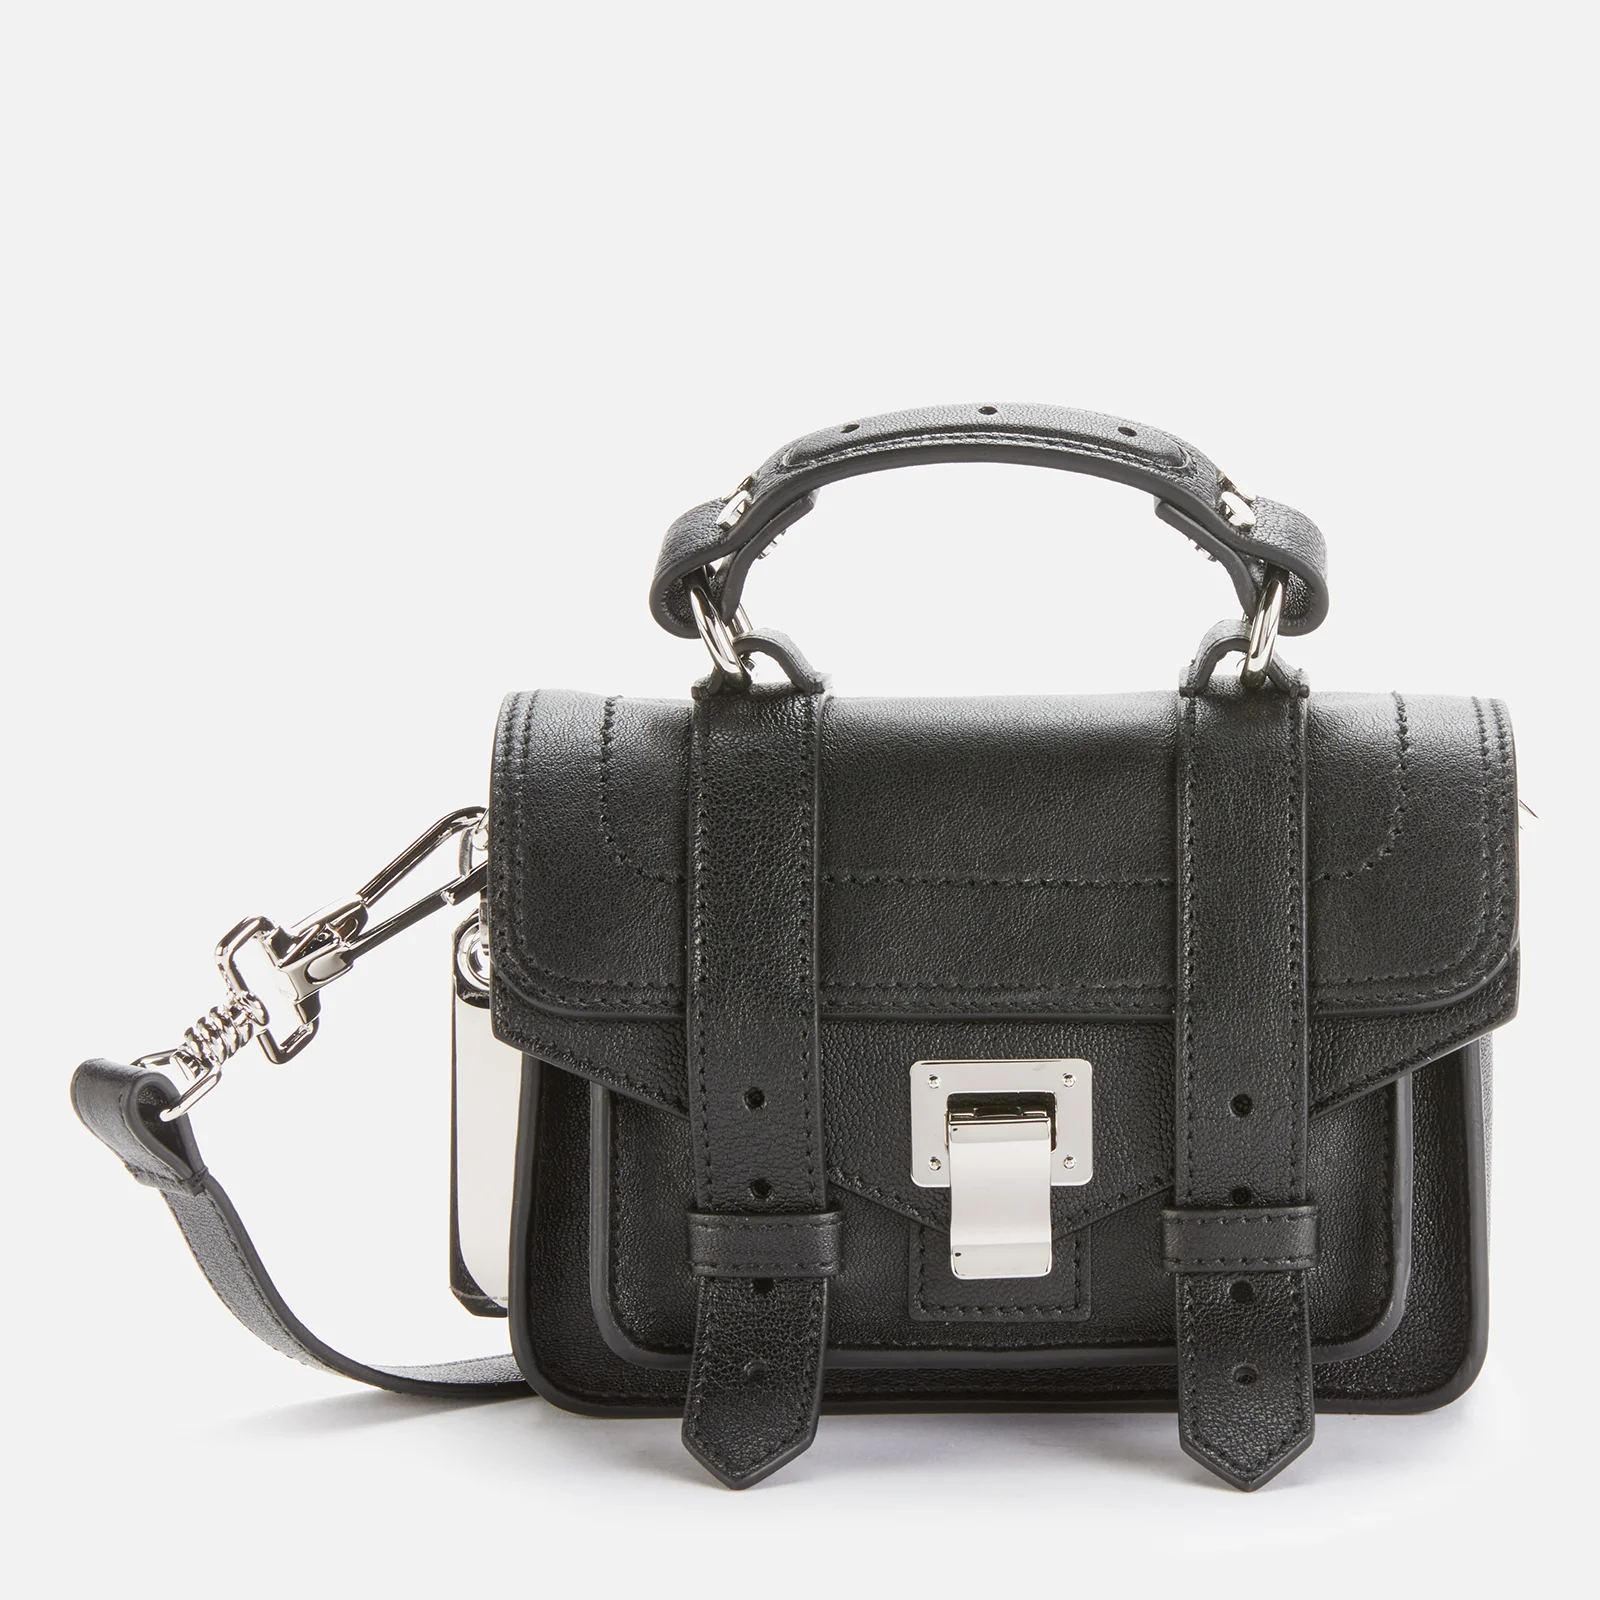 Proenza Schouler Women's Lux Leather Ps1 Micro Bag - Black Image 1